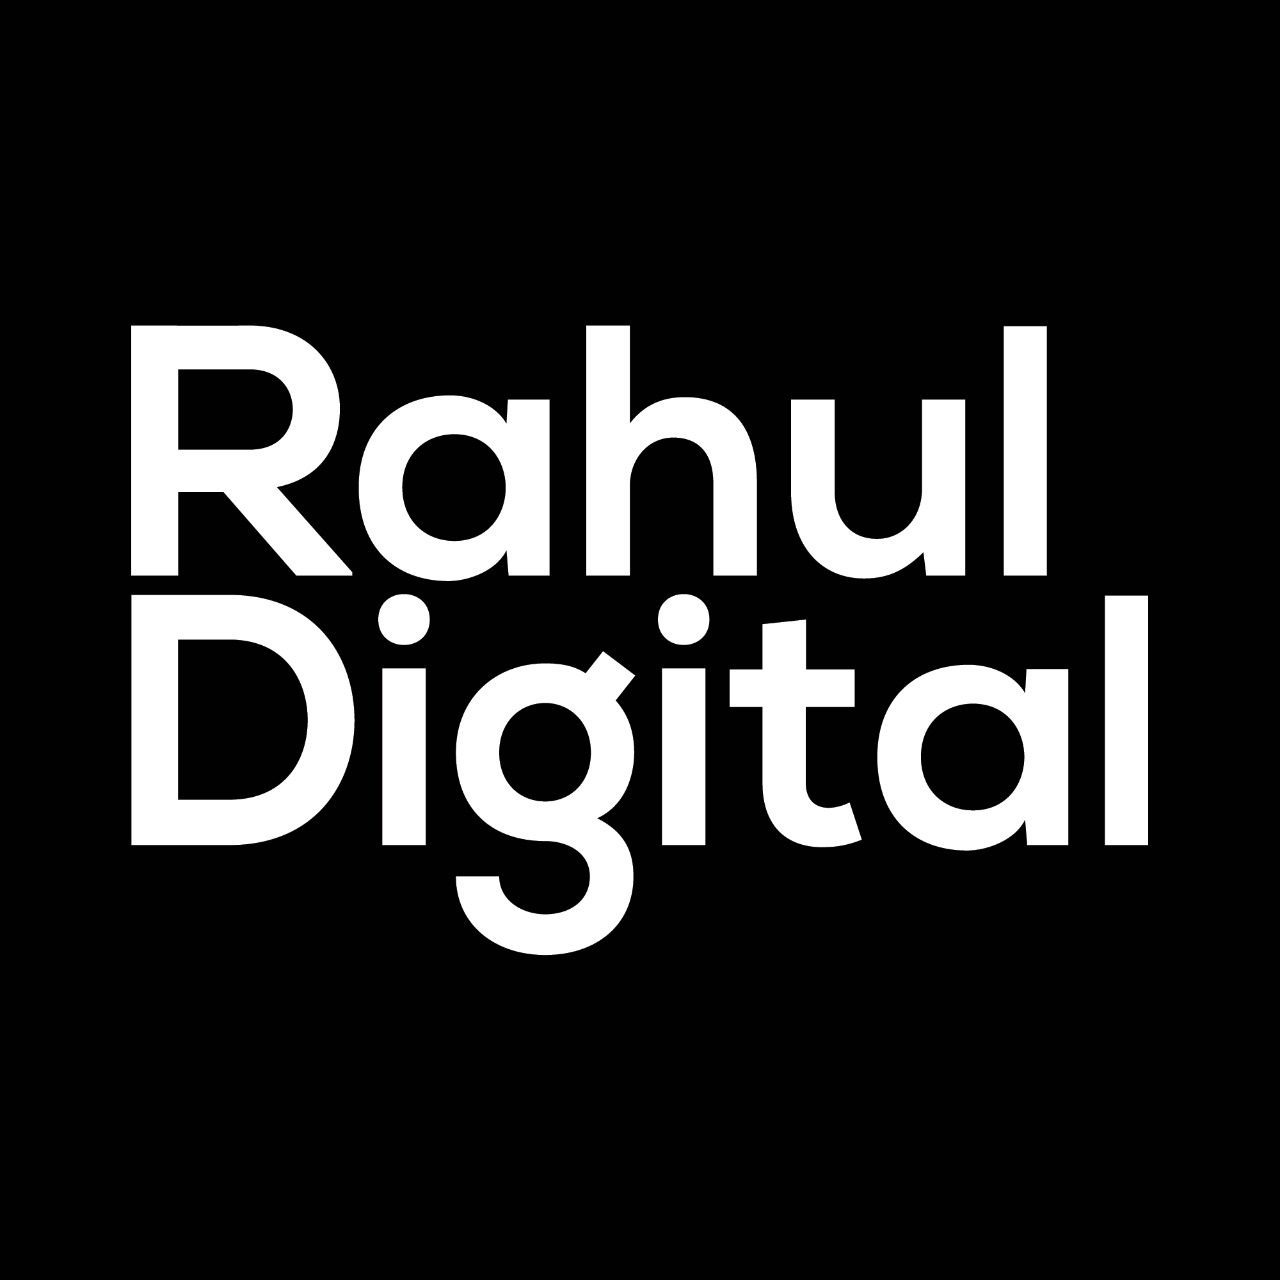 Rahul Digital Marketing Company in Rewari | SEO, SEM, PPC & More